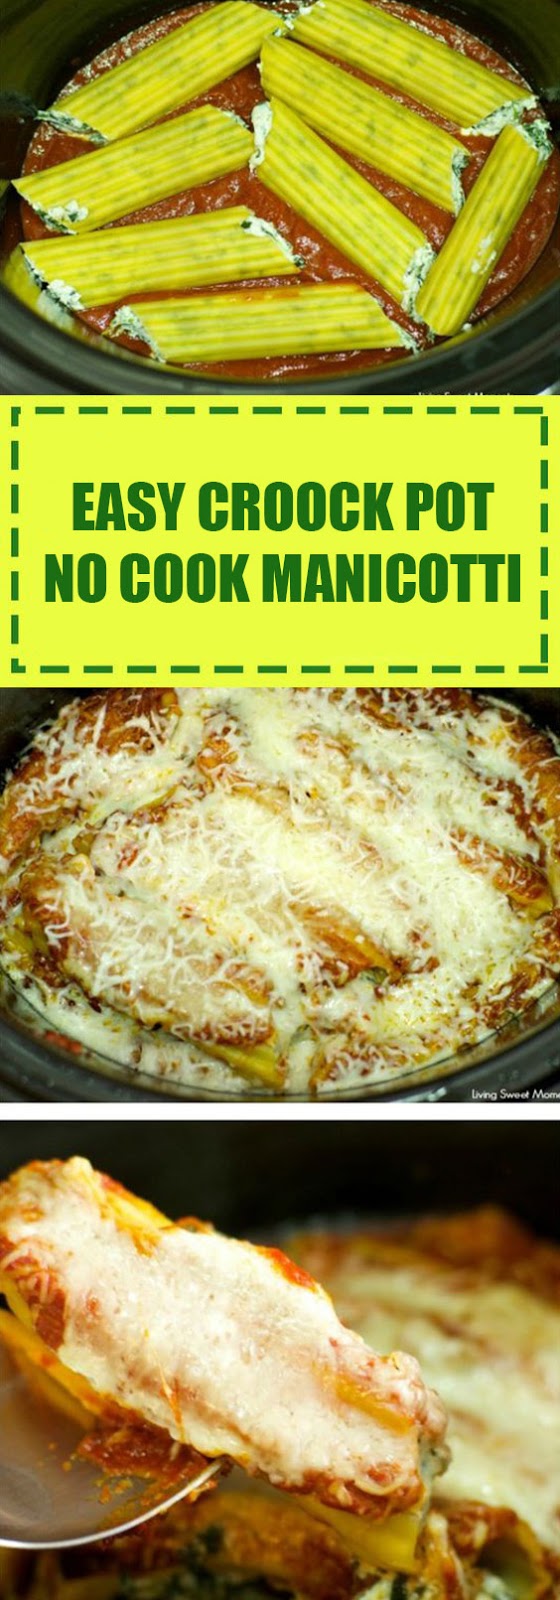 Easy Crock Pot No Cook Manicotti